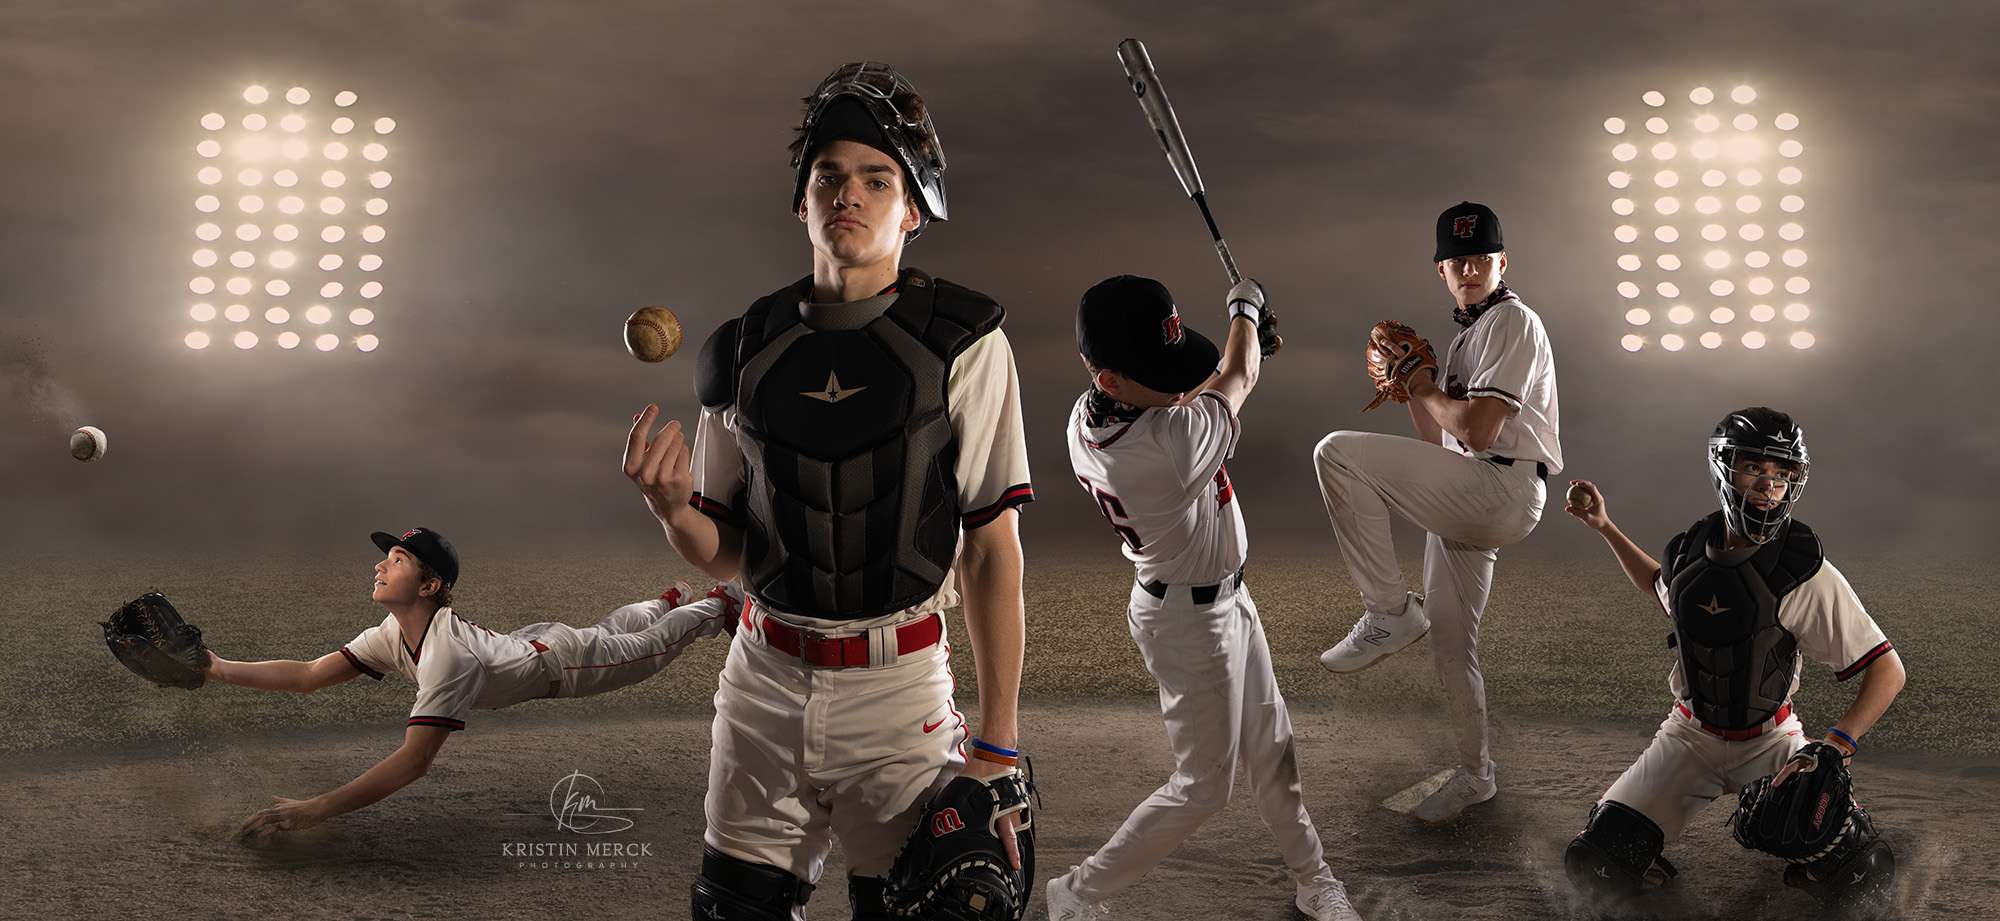 youth baseball players